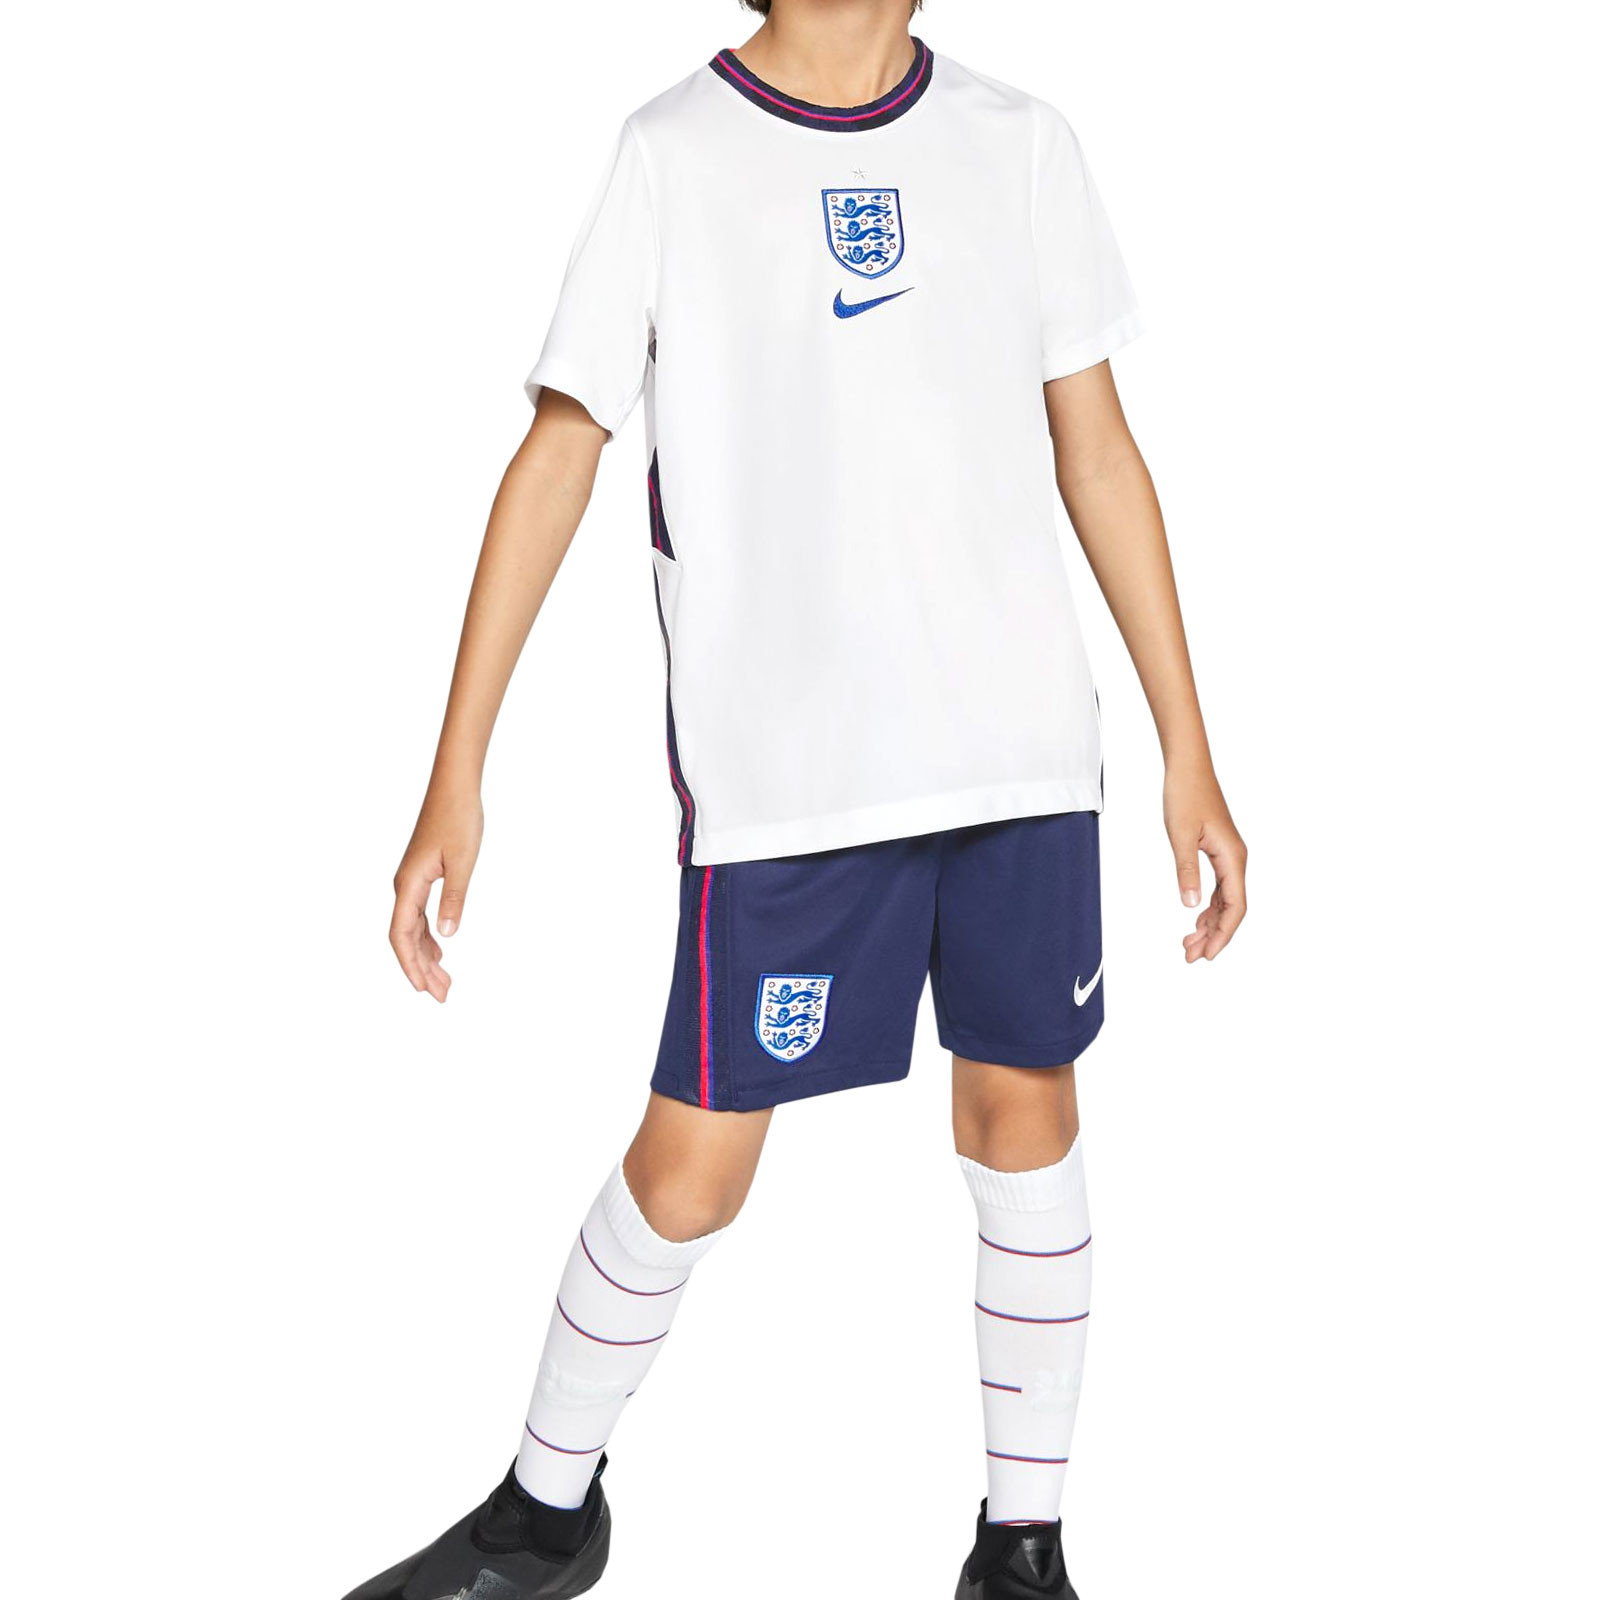 Kit Nike Inglaterra niño 3 - 8 años 2020 2021 |